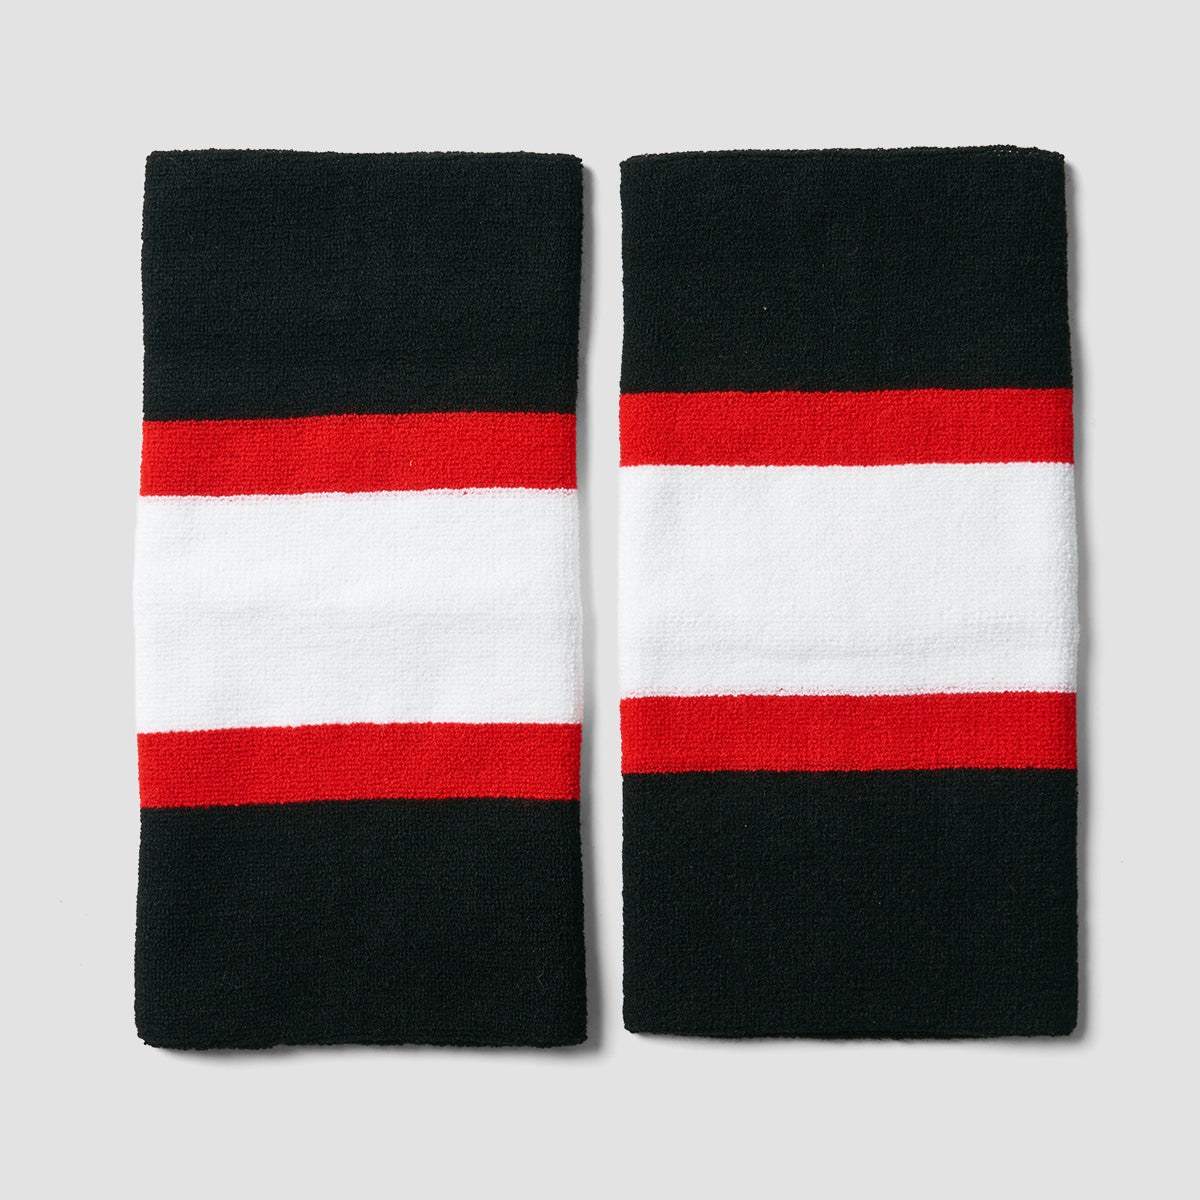 Ventronic Puffers Skate Hockey Socks Leg Warmers Black/White/Red